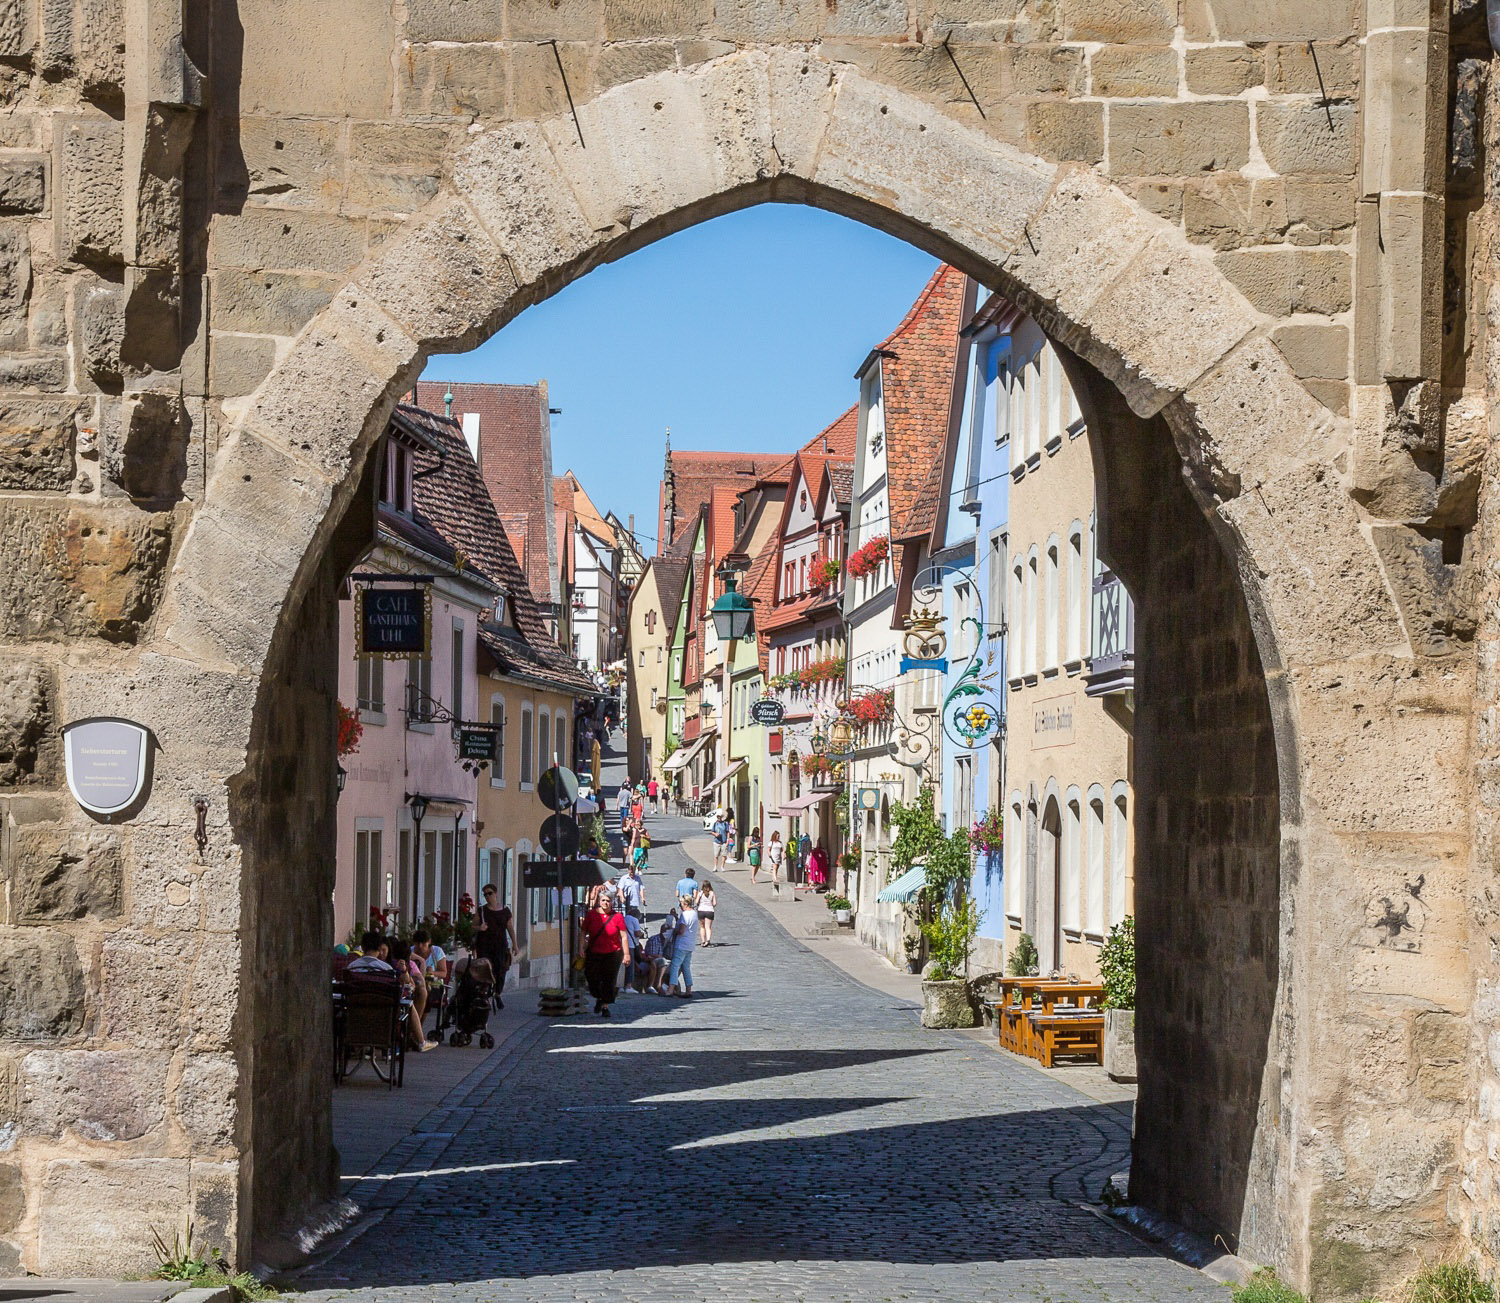 Rothenburg ob der Tauber Photo Maxmann on Pixabay